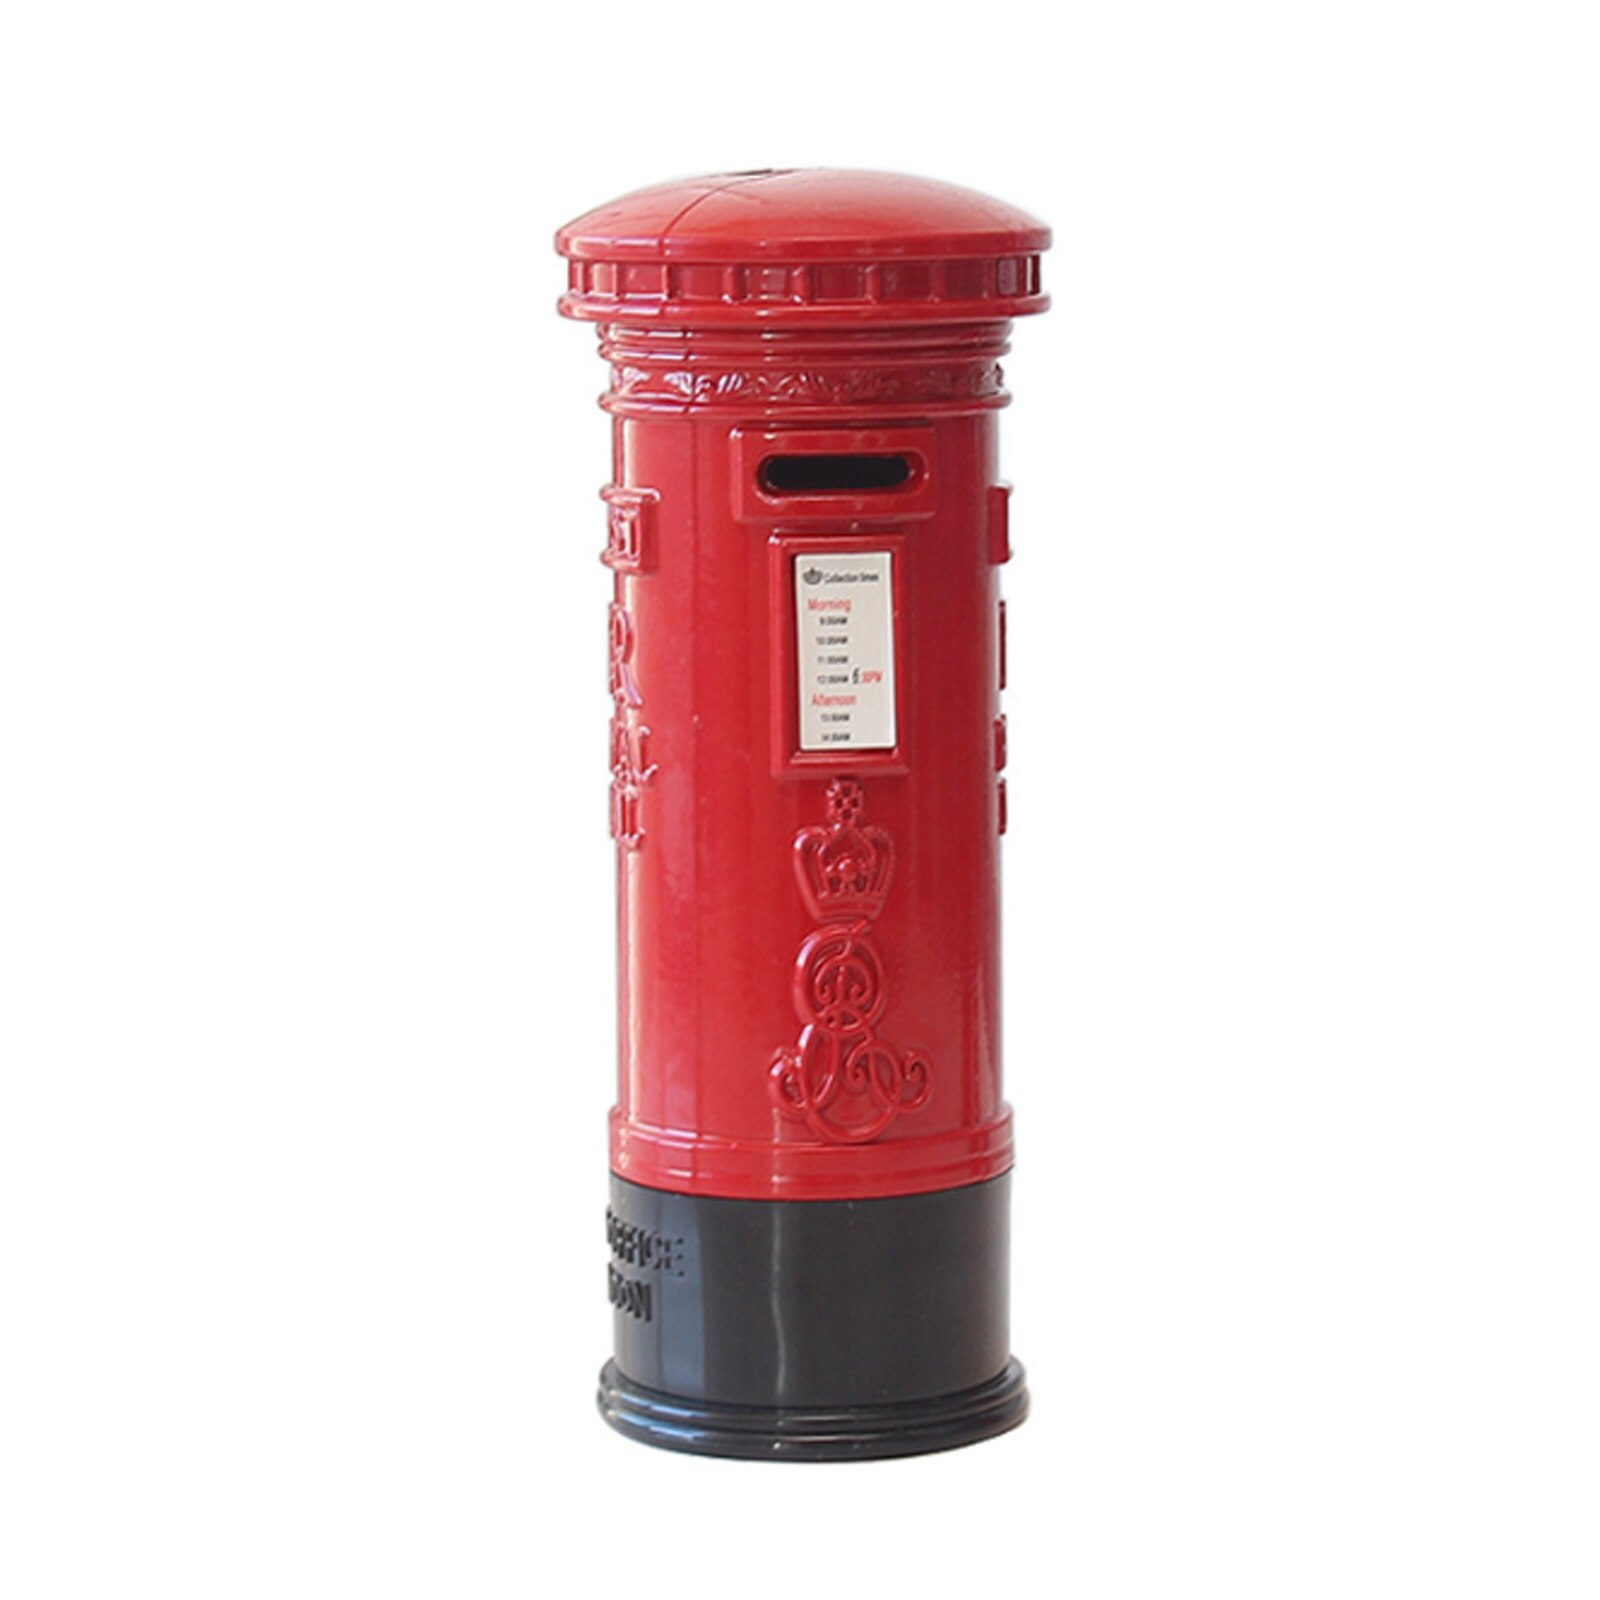 Legering engelsk london telefonboks bank møntbank sparekasse sparegris rød telefonboks: A2